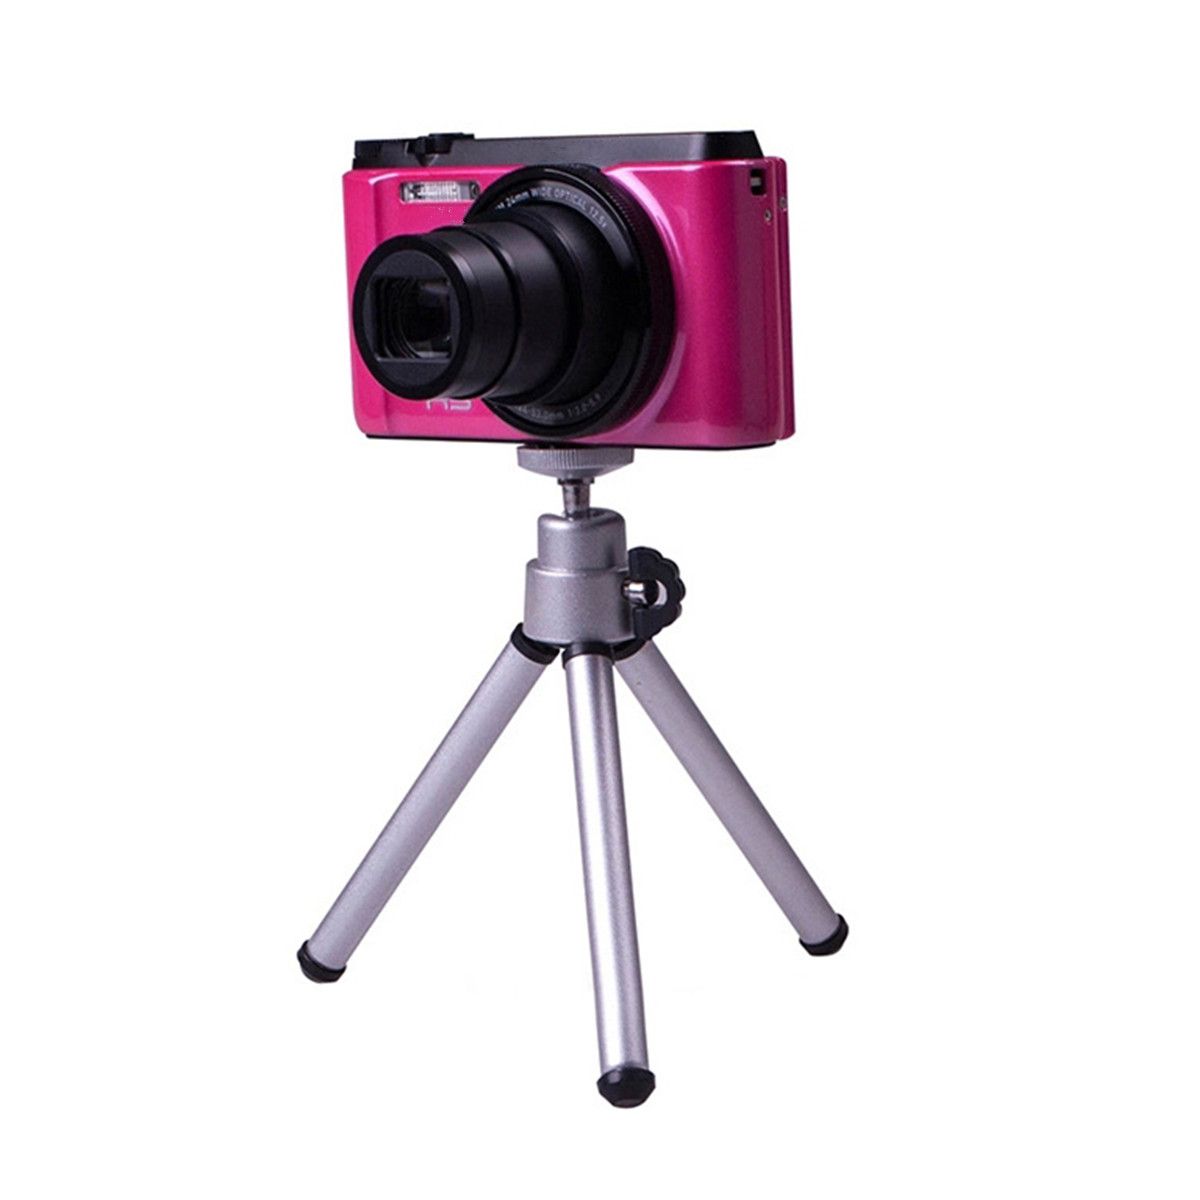 12X-Zoom-80deg-Angle-Optical-Telephoto-Telescope-Lens-with-Aluminum-Tripod-Mount-Holder-for-Smartpho-1121236